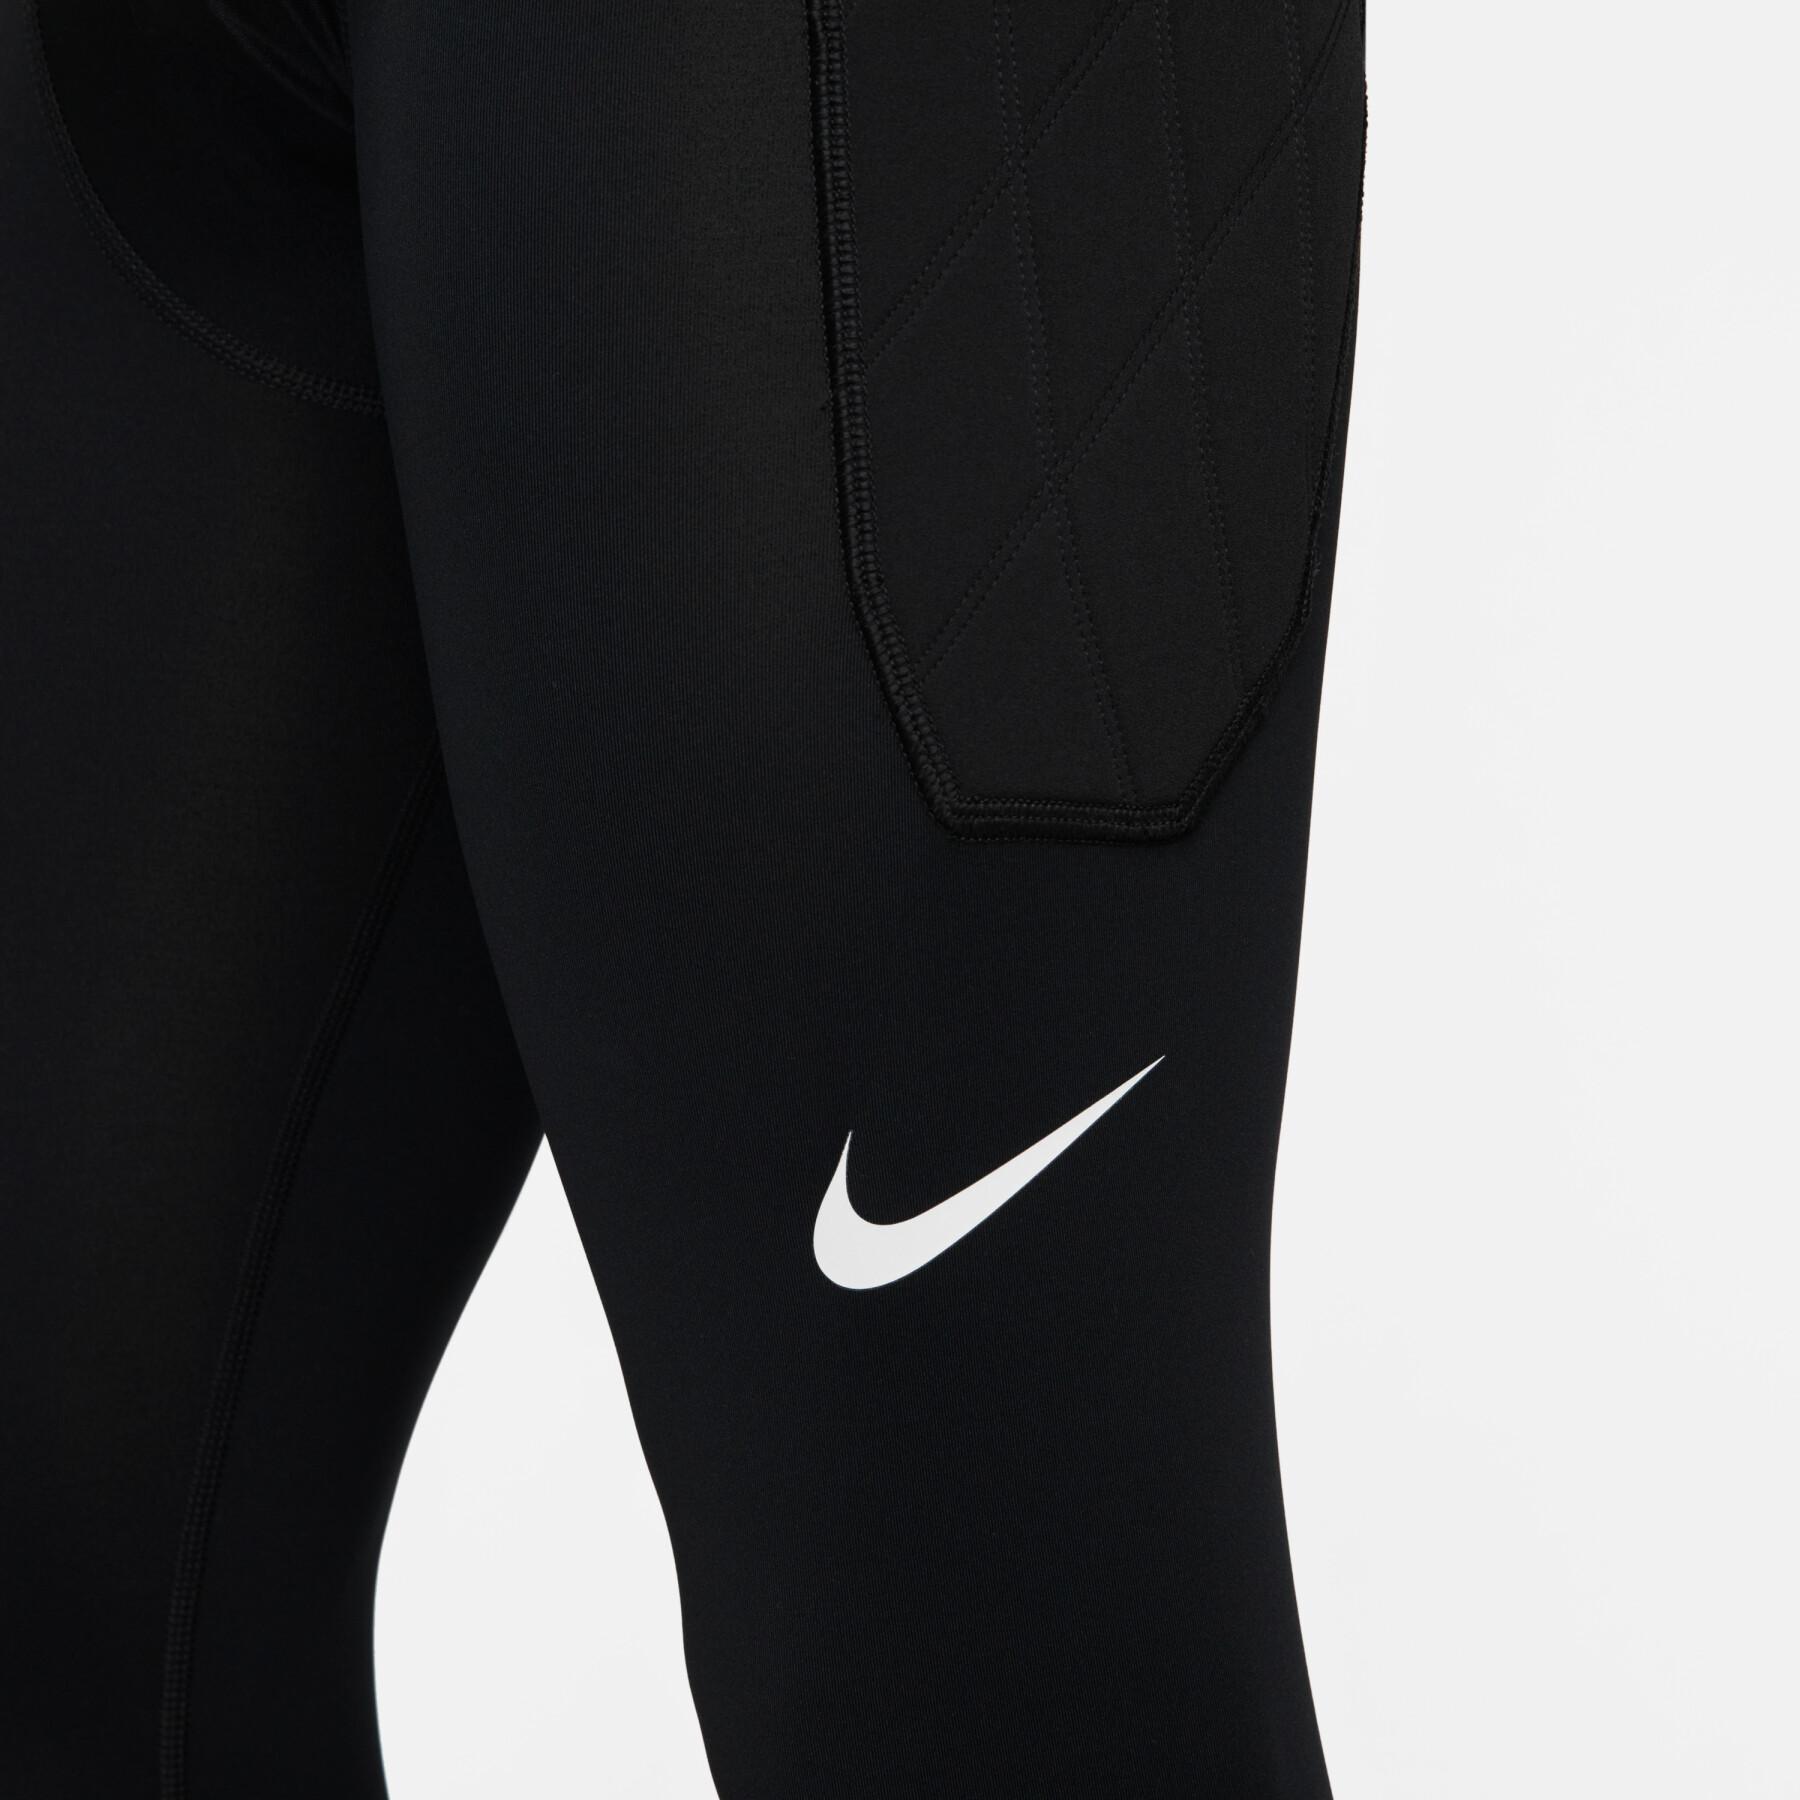 Spodnie bramkarskie Nike Dri-FIT Goalkeeper I